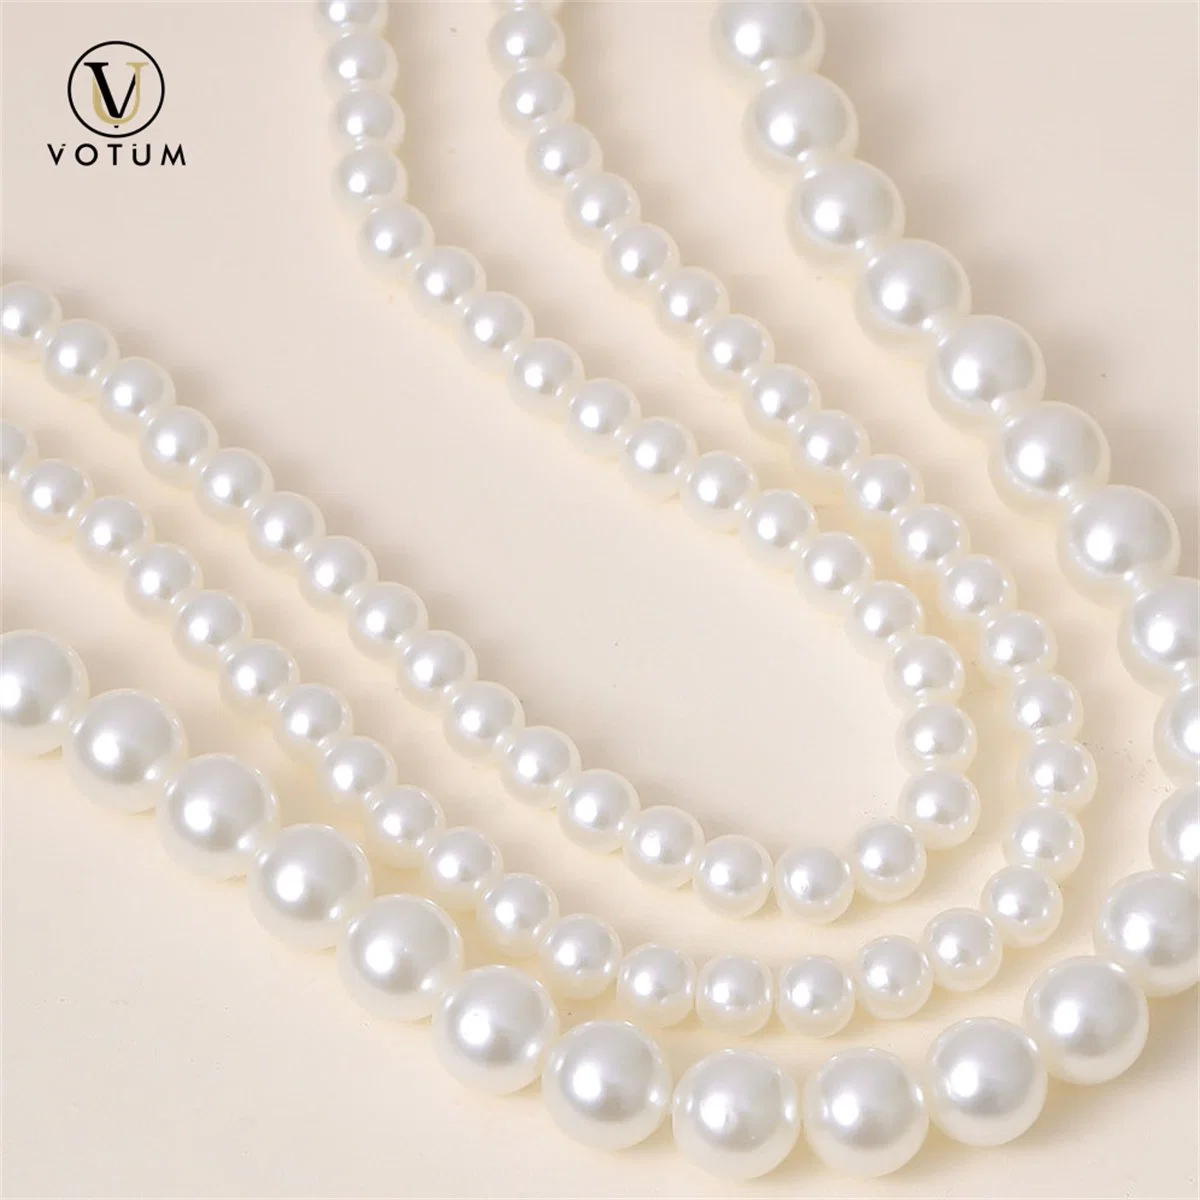 Votum OEM Custom S925 Silver Freshwater Edison Pearl Choker Wedding Ожерелье ювелирные изделия